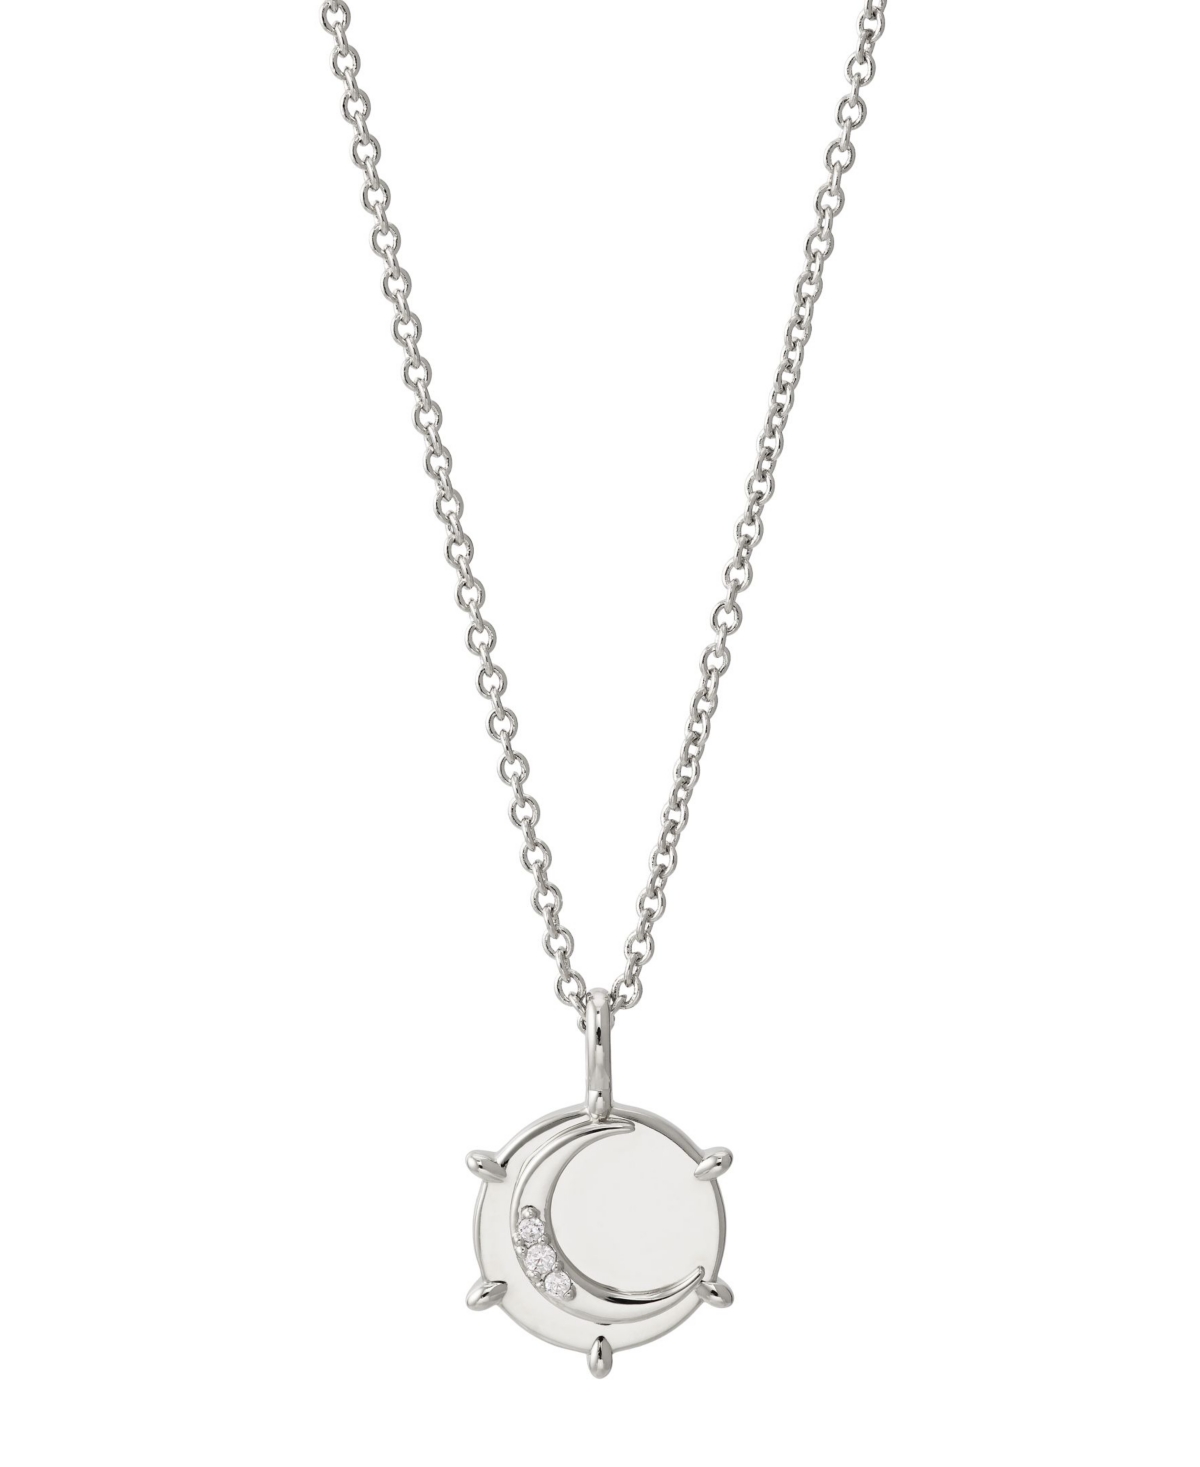 Moon Pendant Necklace - Silver-Tone